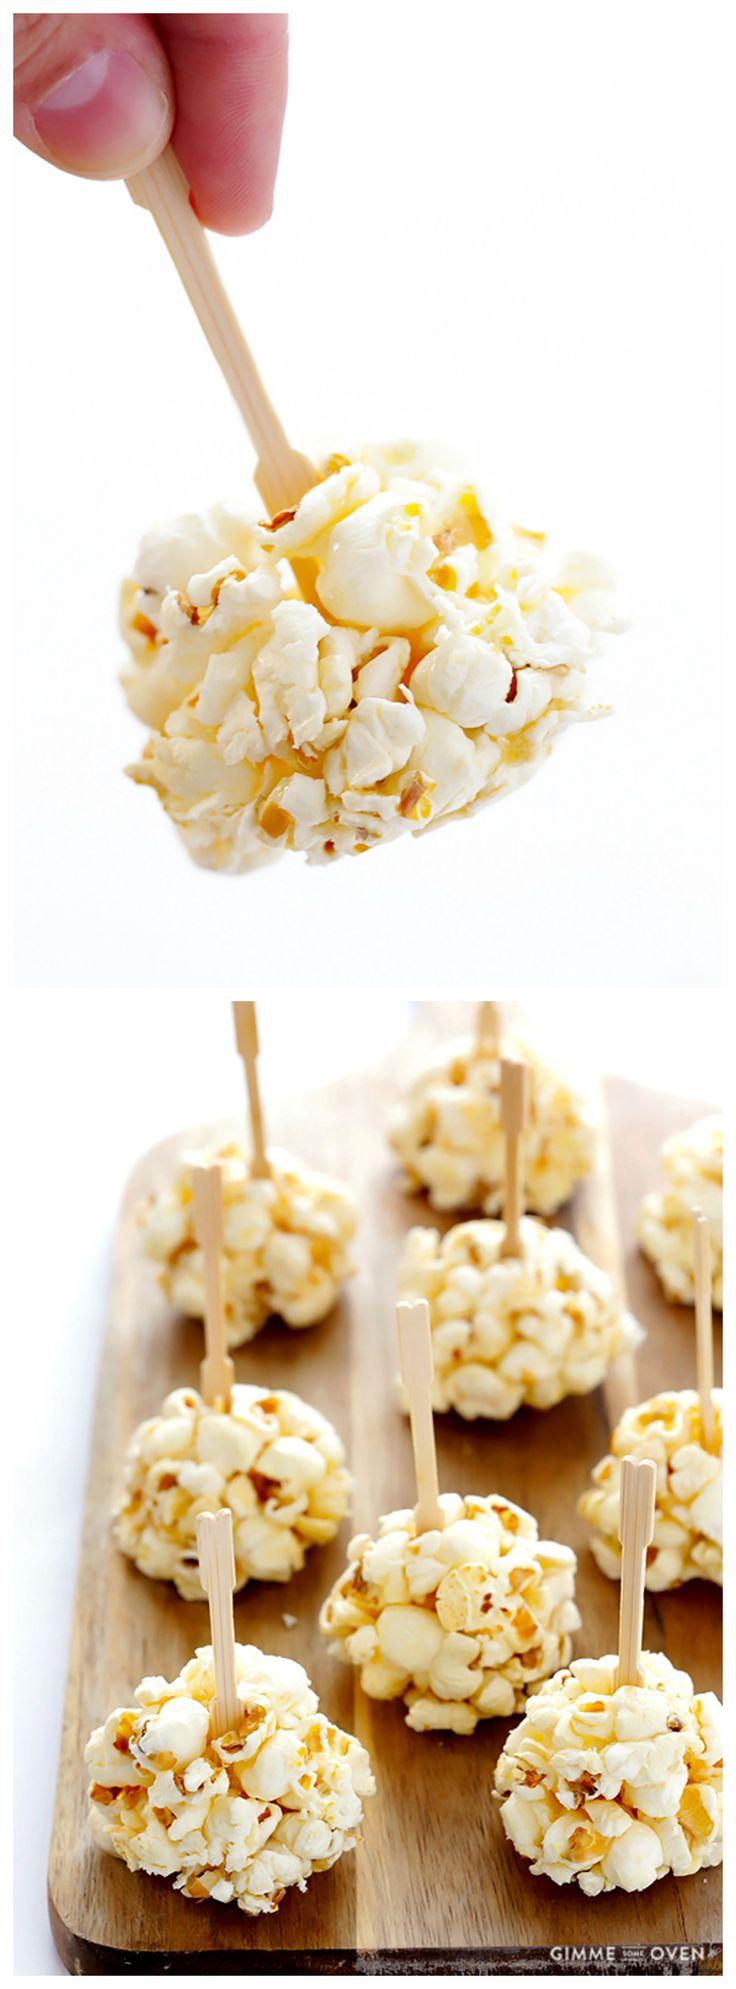 Food & Favor - Naturally-Sweetened Honey Popcorn Balls #2549257 - Weddbook